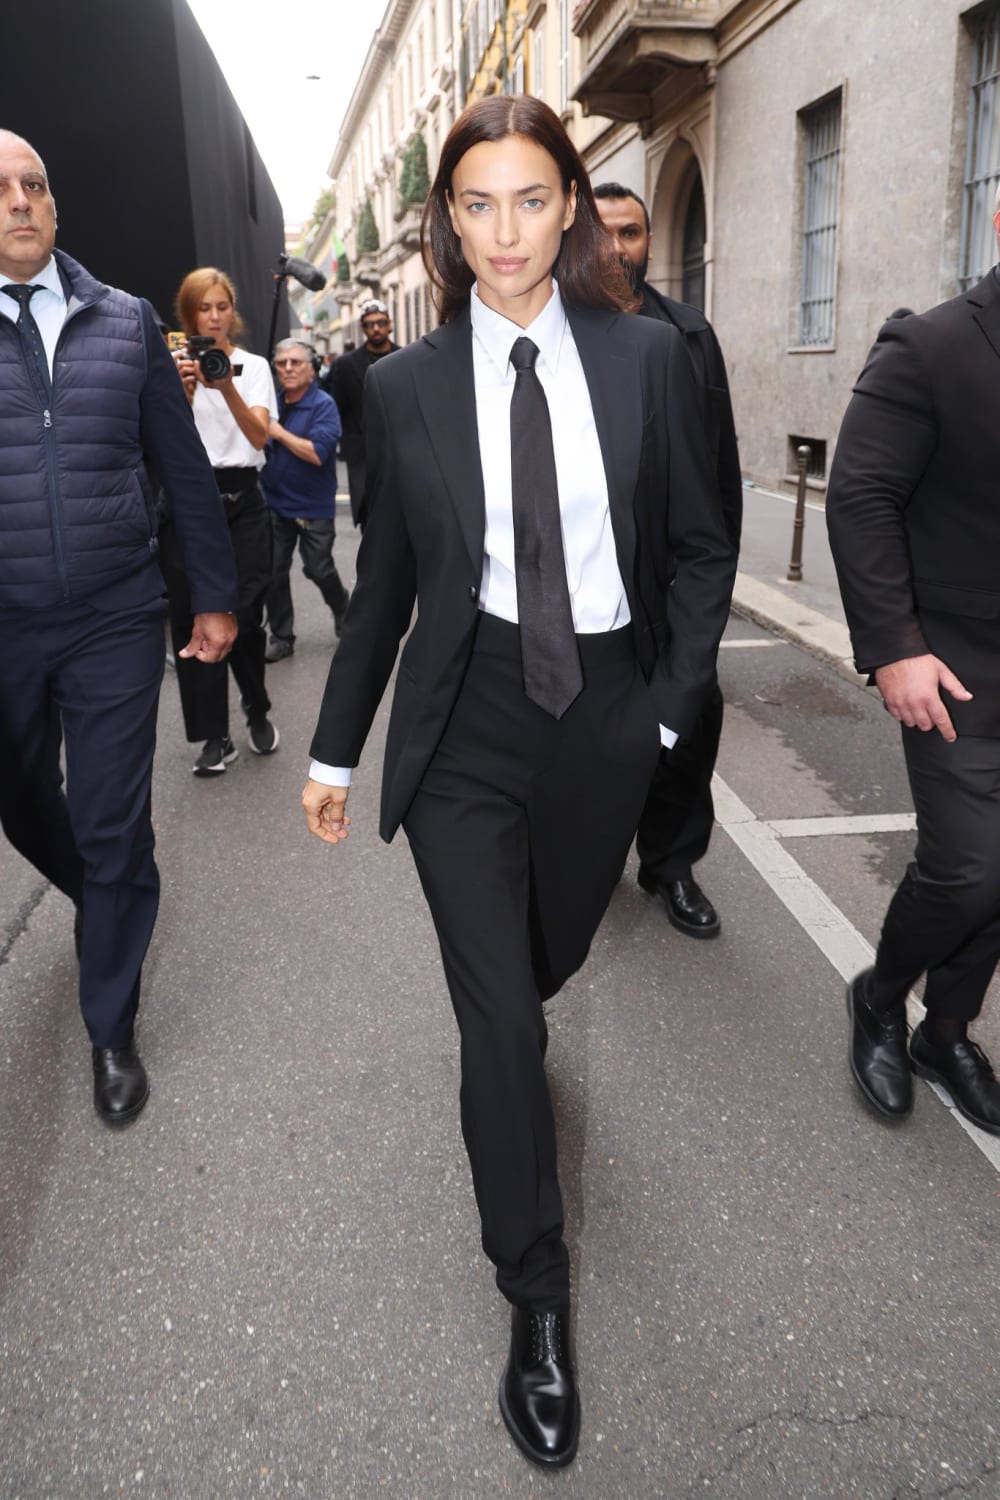 Irina Shayk on her suit and tie sh*t at Giorgio Armani #MFW.